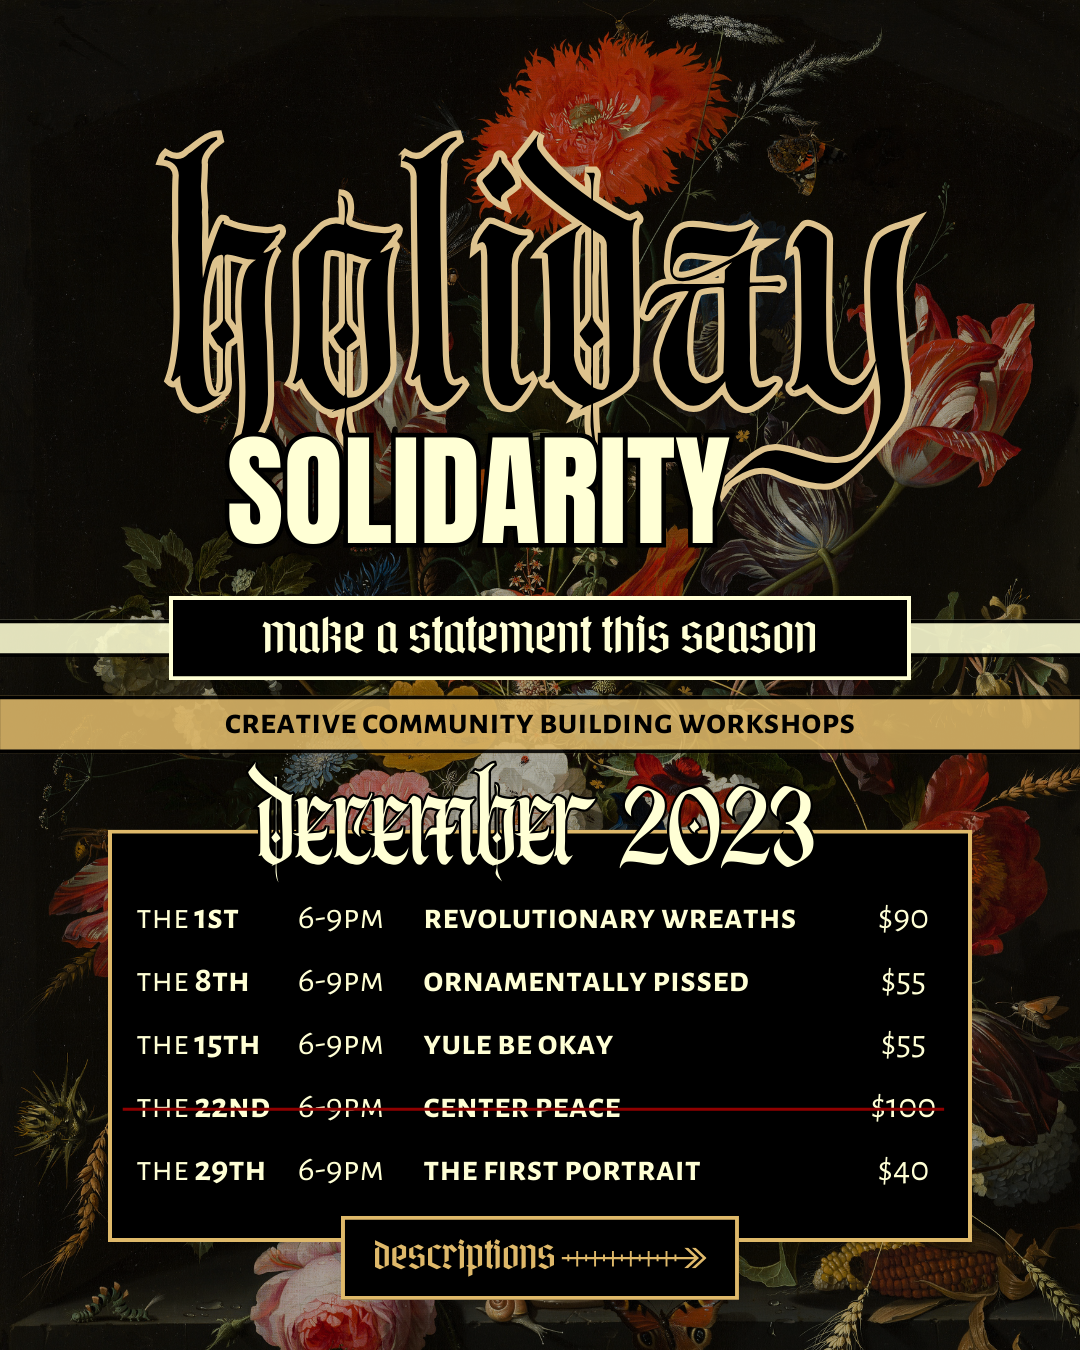 Holiday Solidarity Workshops